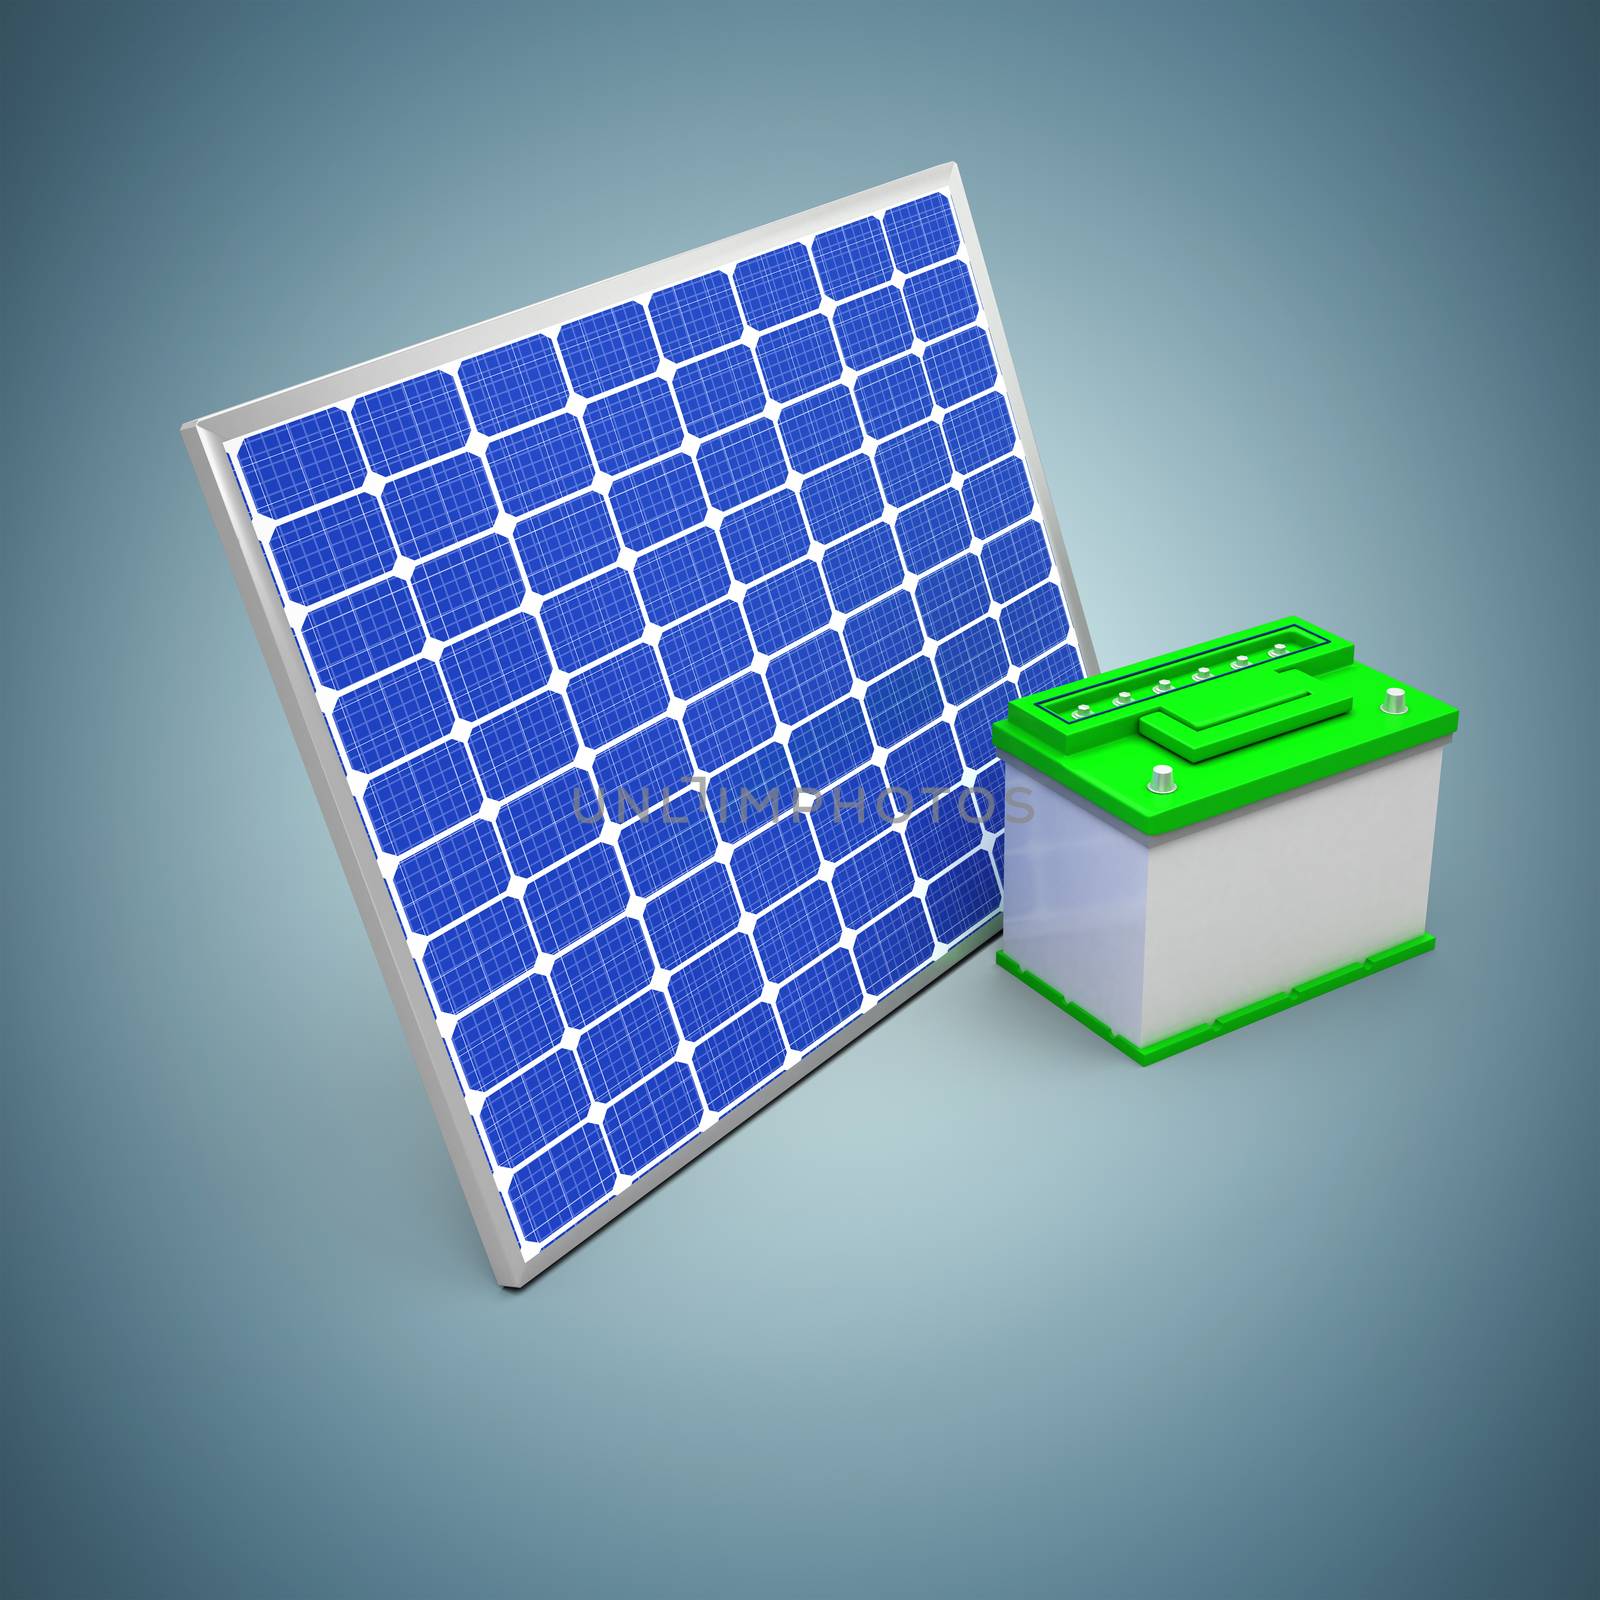 3d illustration of solar panel with battery against grey vignette